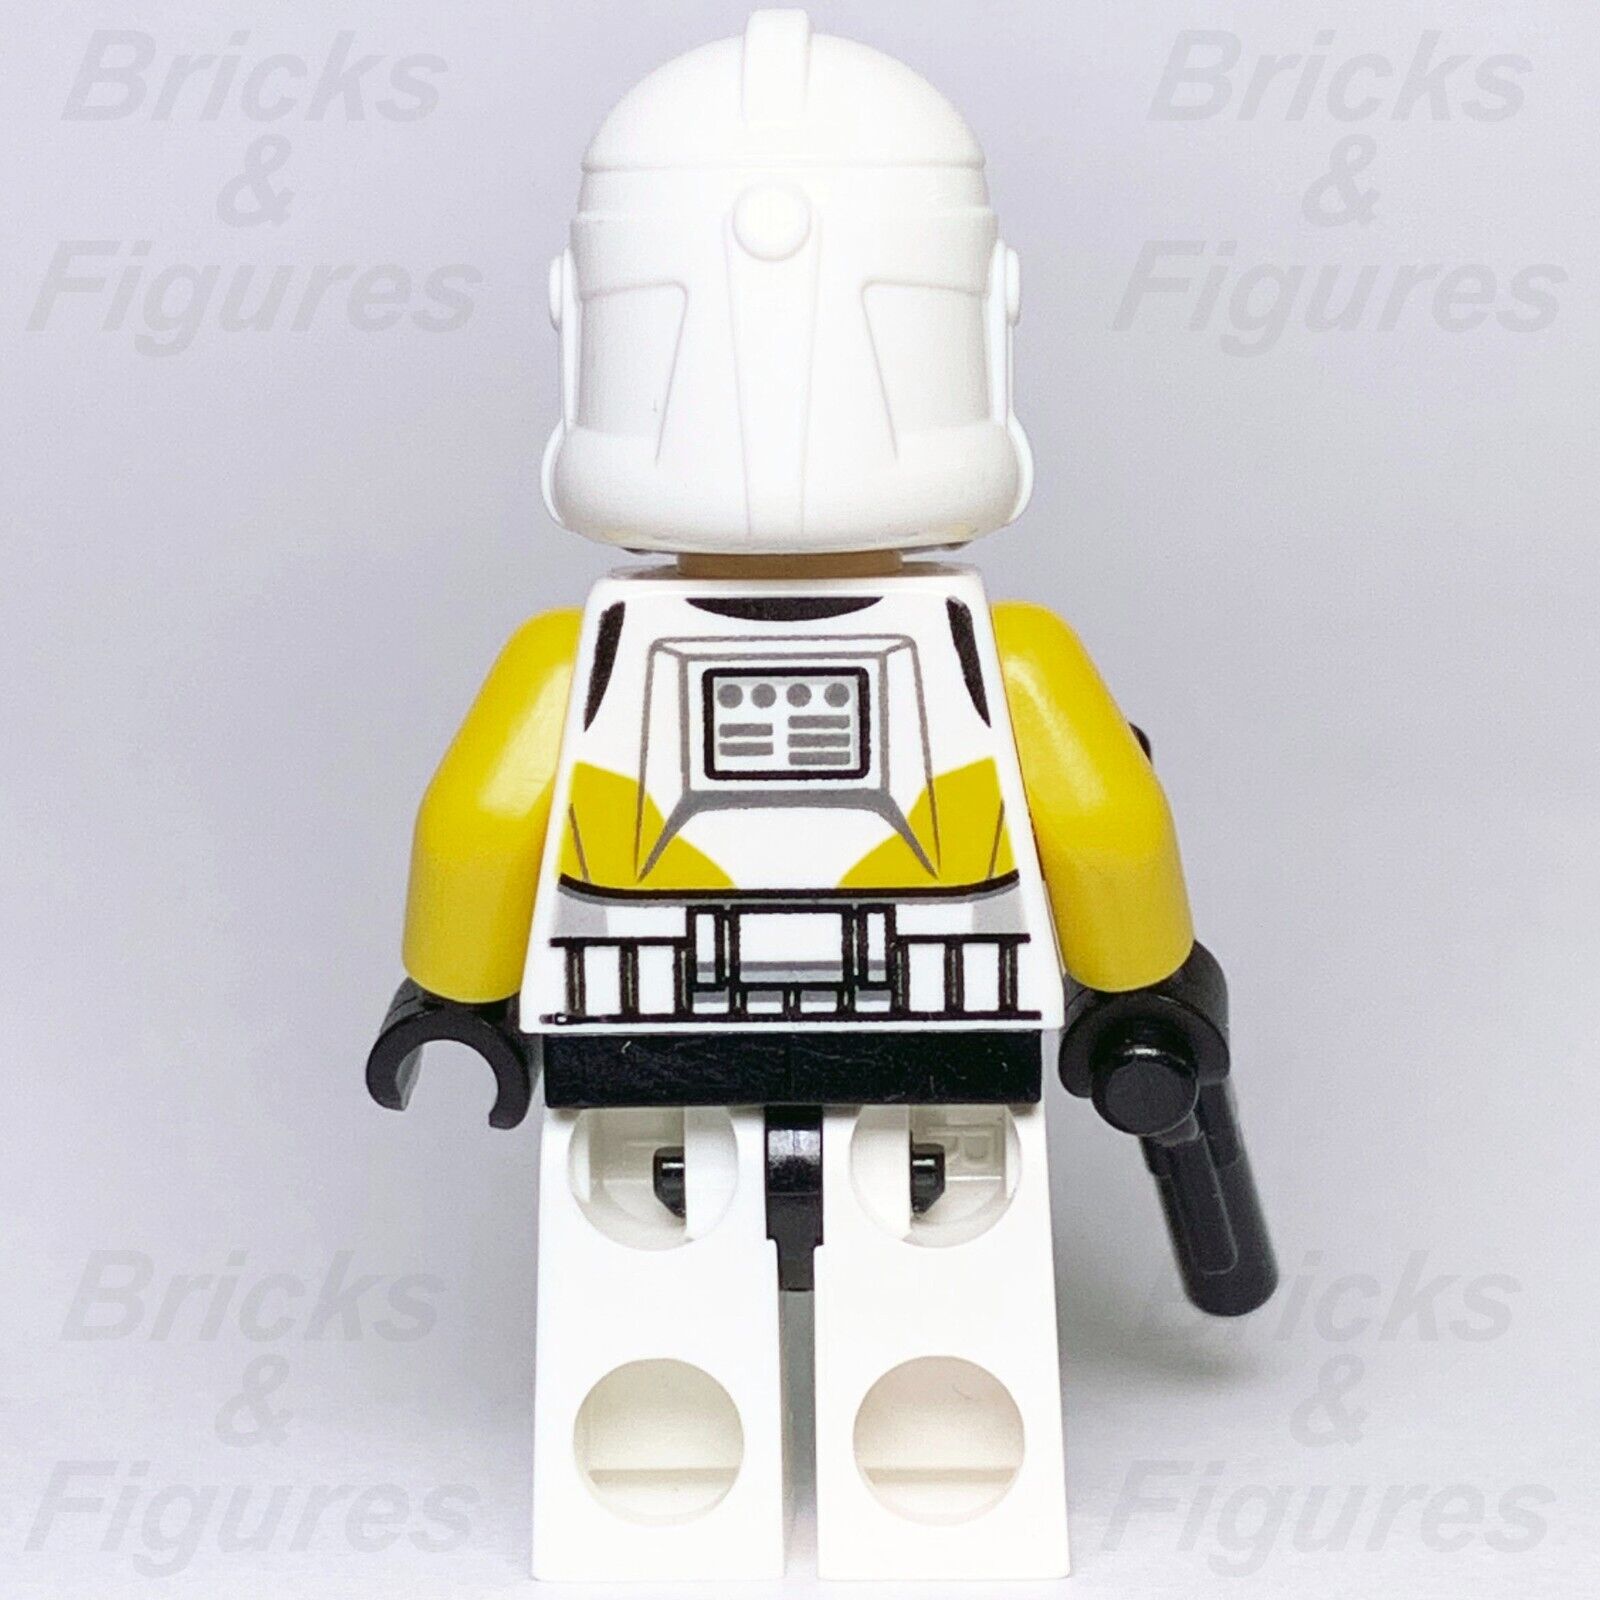 LEGO Star Wars Clone Trooper Minifigure 212th Attack Battalion Phase 2 75013 - Bricks & Figures